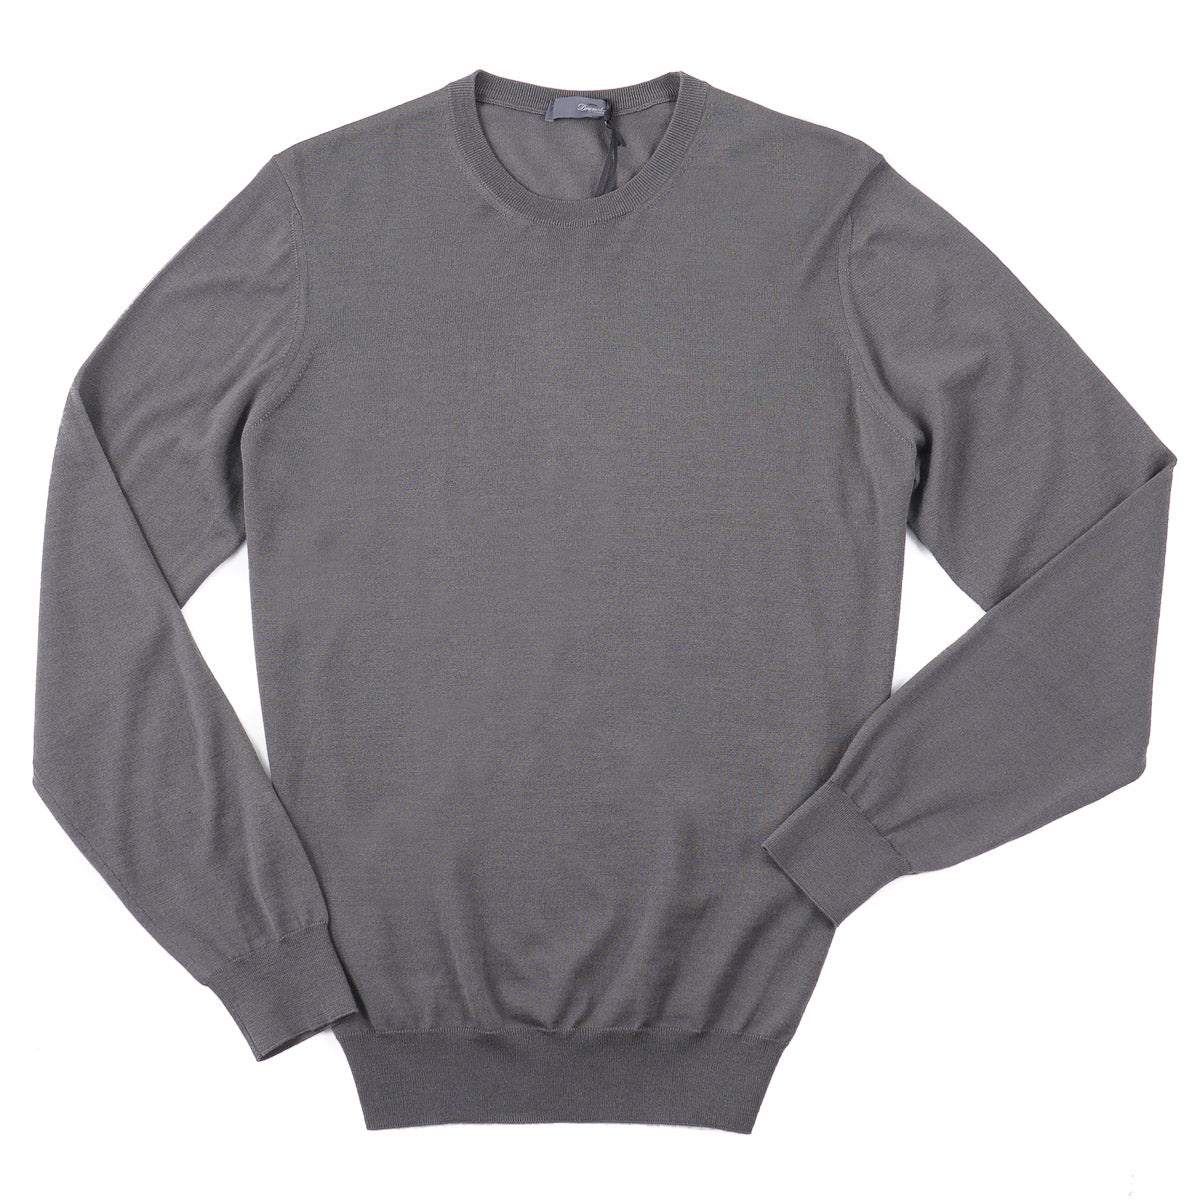 Drumohr Superfine Merino Wool Sweater - Top Shelf Apparel